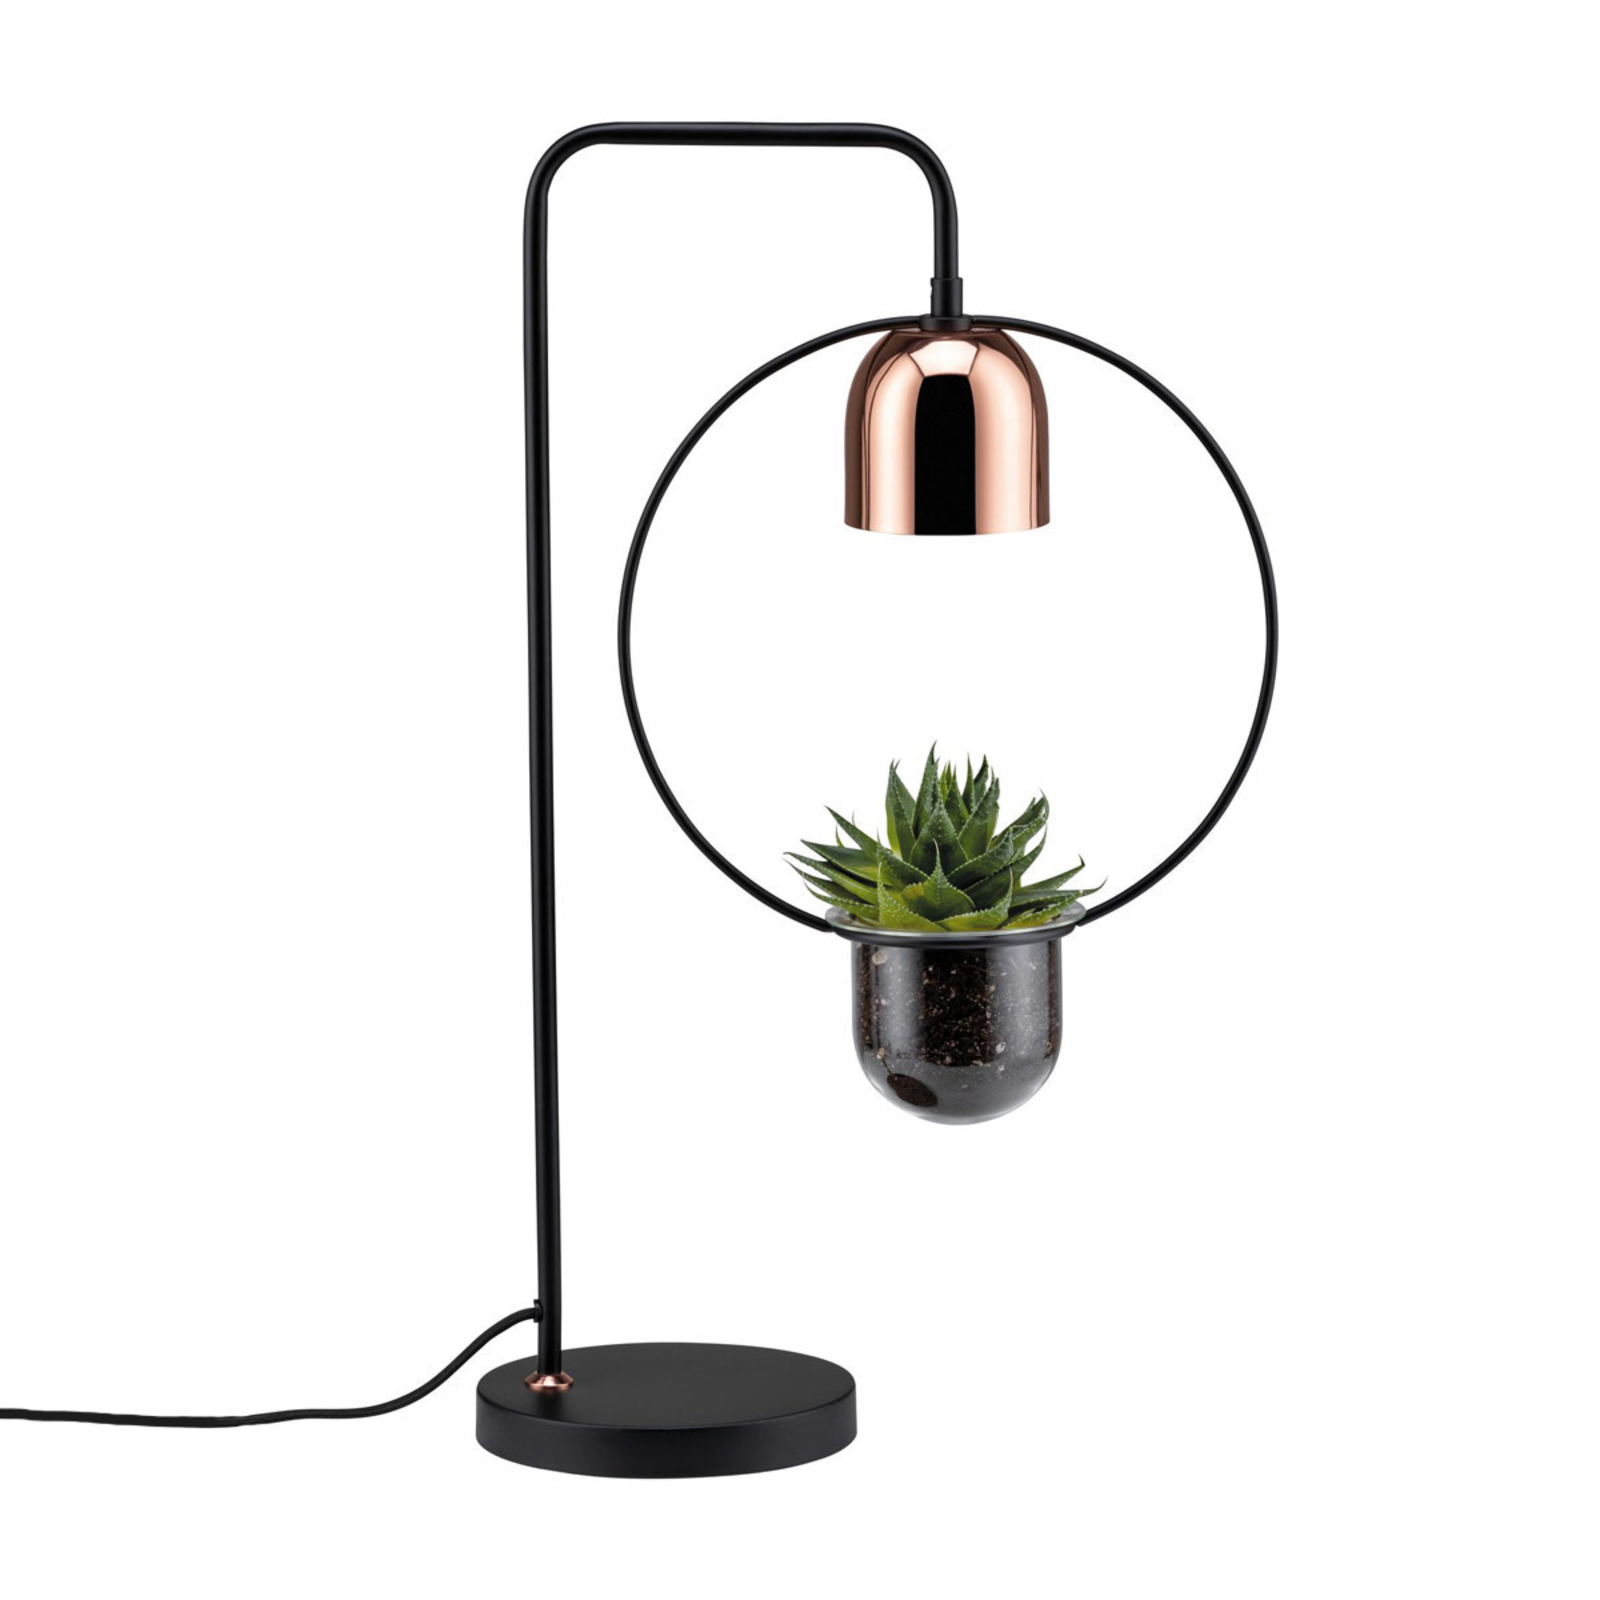 Paulmann Fanja table lamp with a plant pot